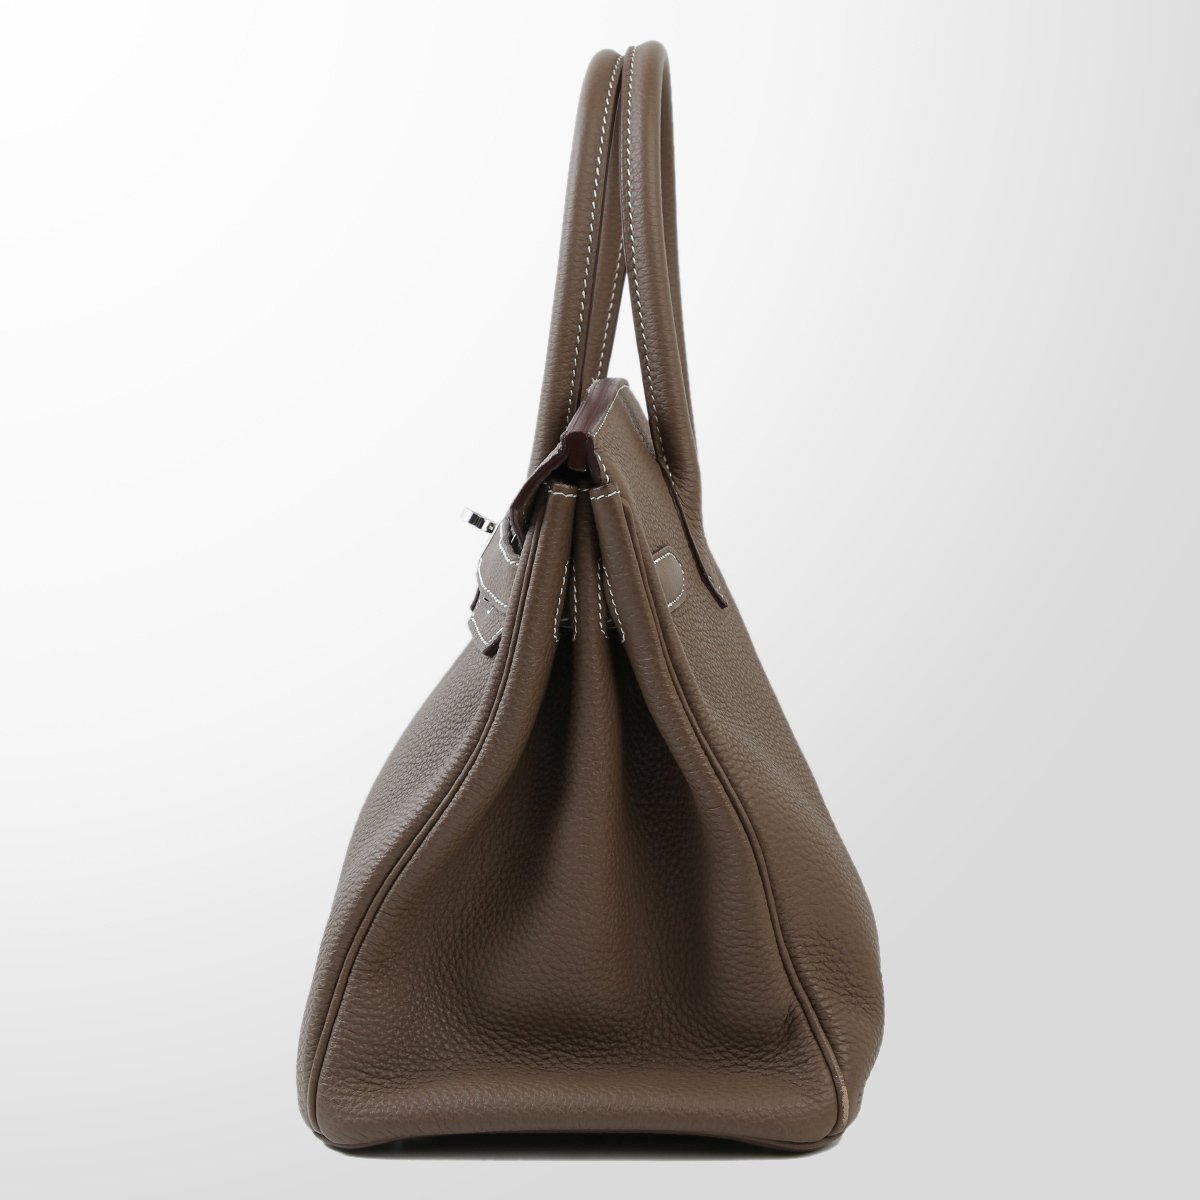 Hermès Birkin 30 Togo Leather Handbag In Dubai, Dubai, United Arab Emirates  For Sale (13391815)